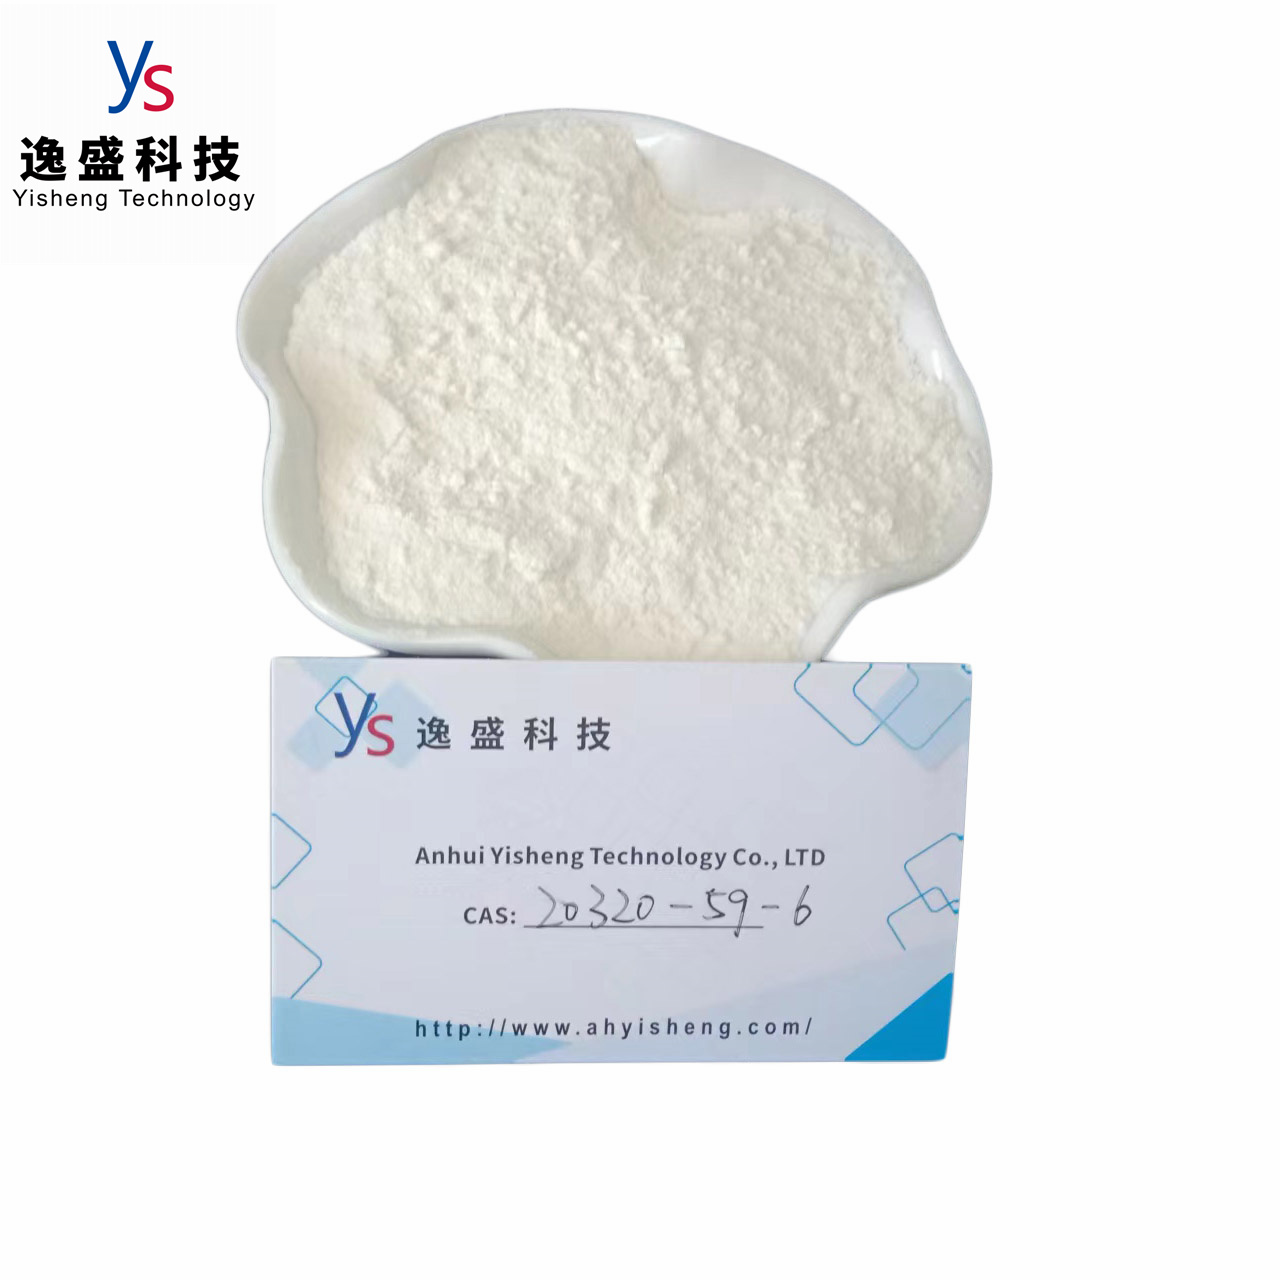  CAS 20320-59-6 Top Quality Pharmaceutical Intermediates BMK Powder